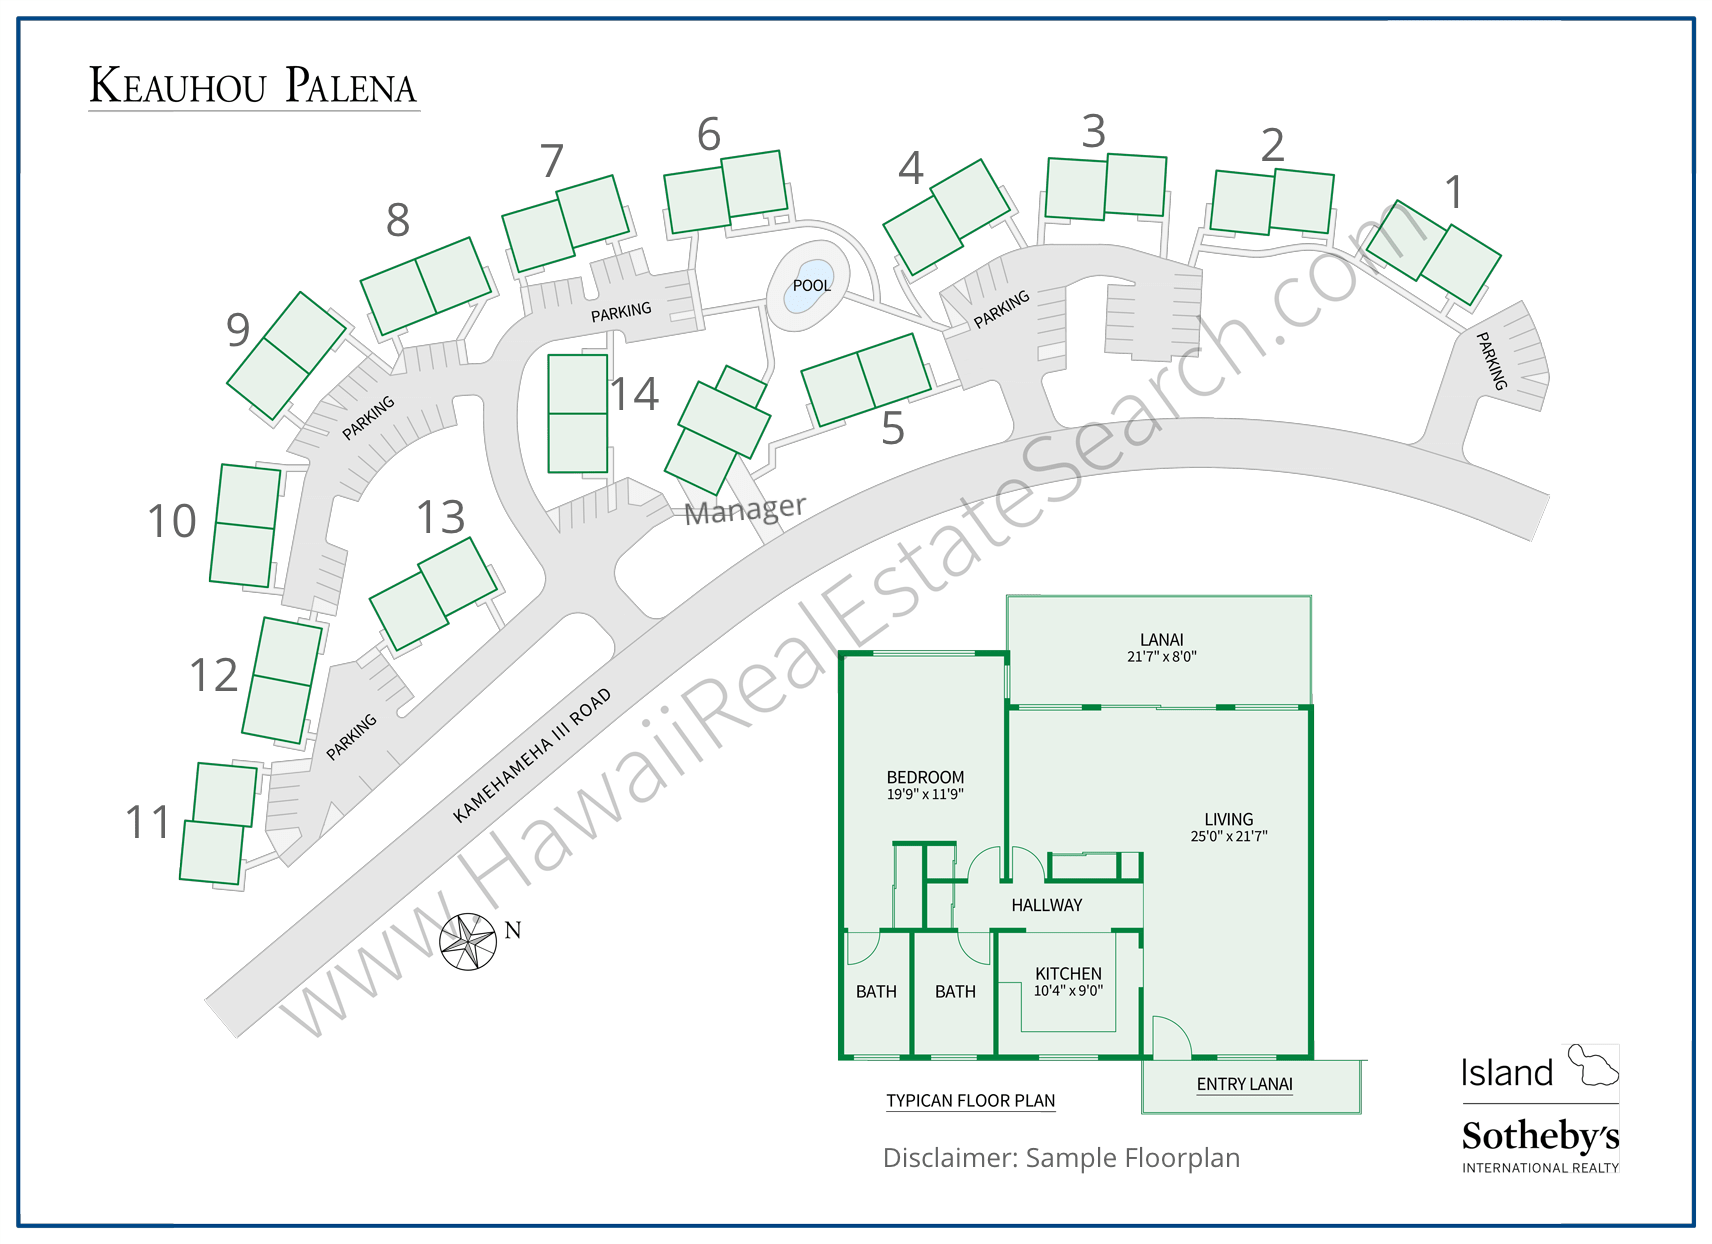 Keauhou Palena Map 2020